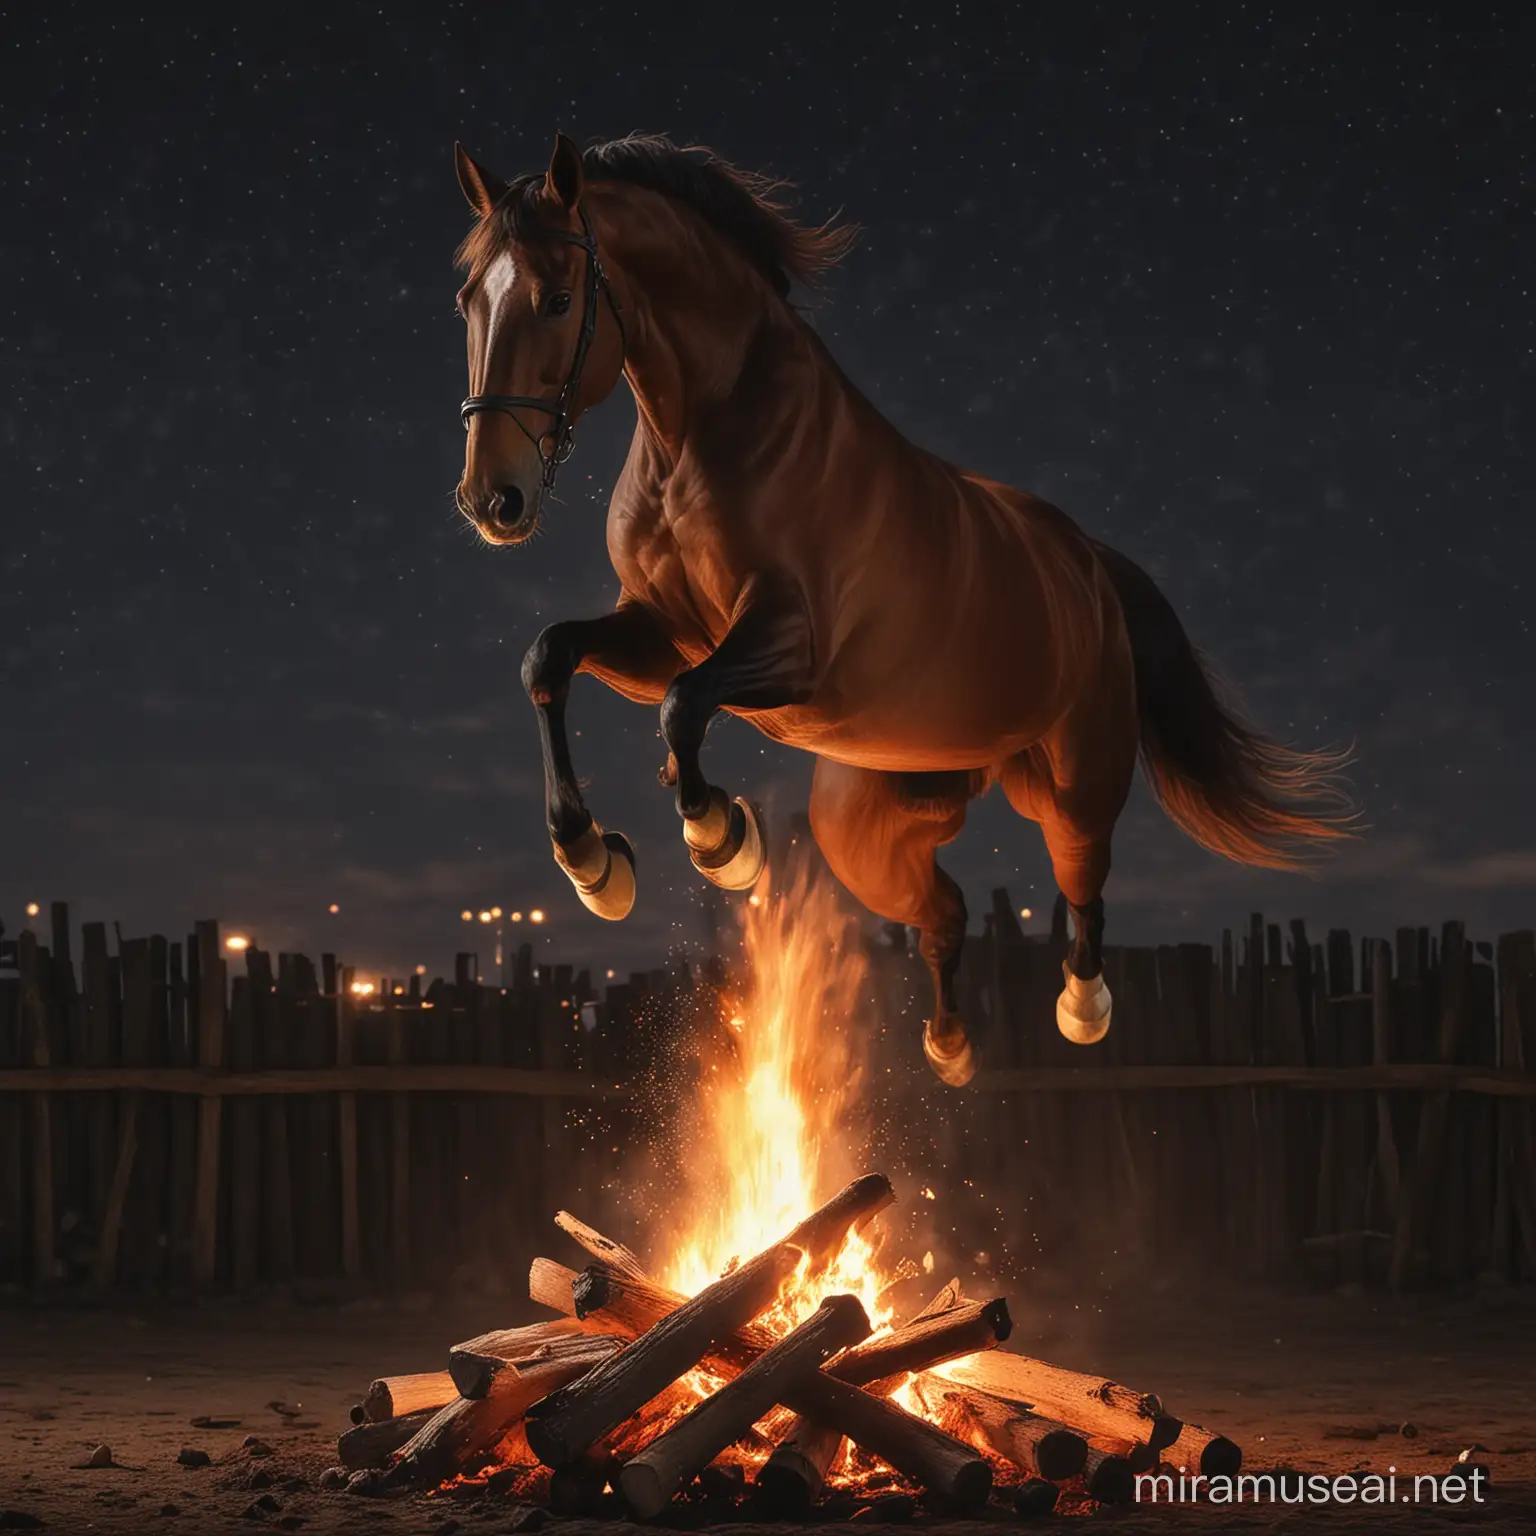 Bay horse jumping over a bonfire at night realistic